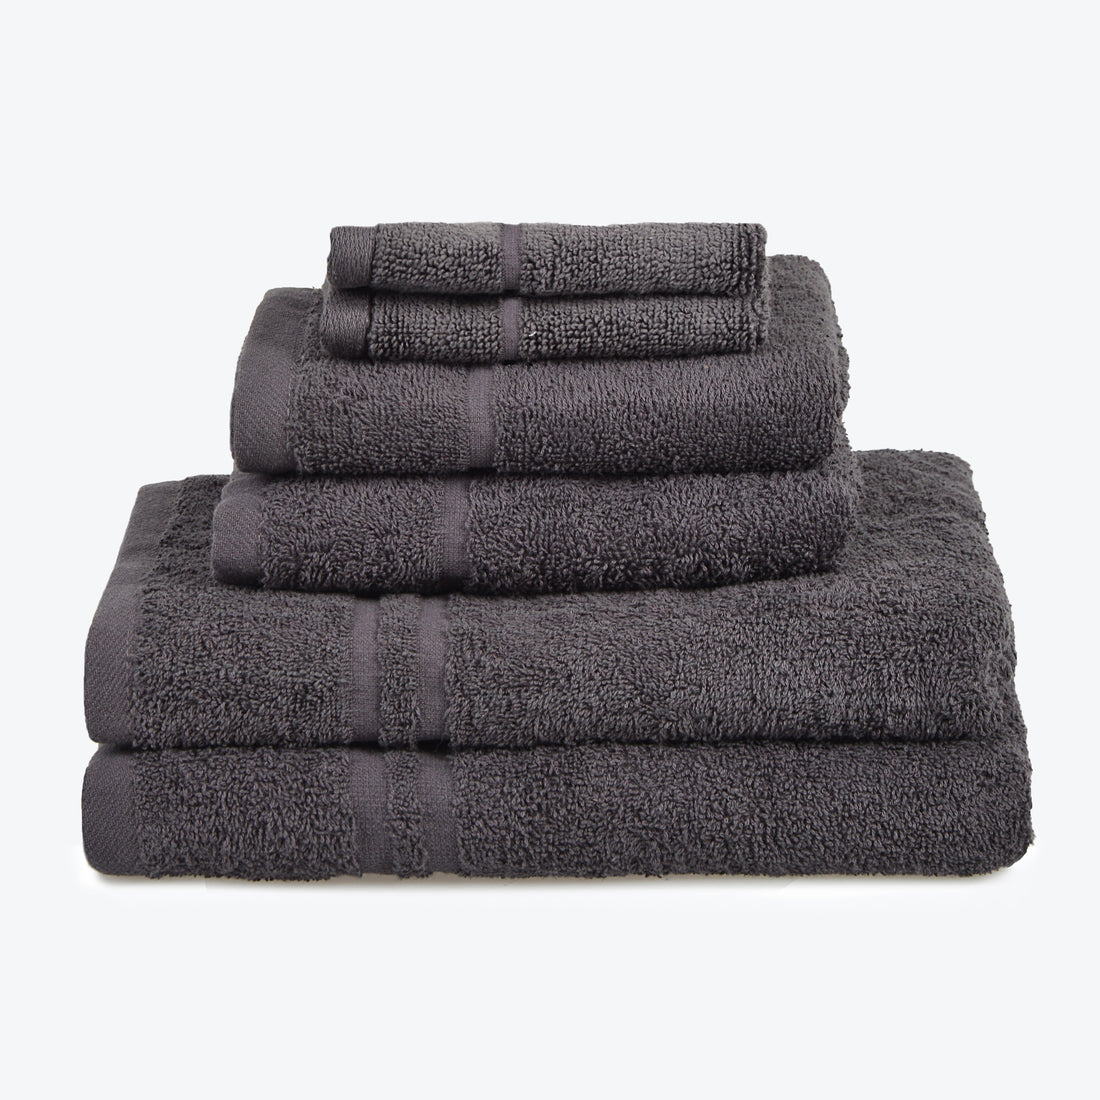 Hotel Quality Towel Bale - Charcoal 6pc Towel Set